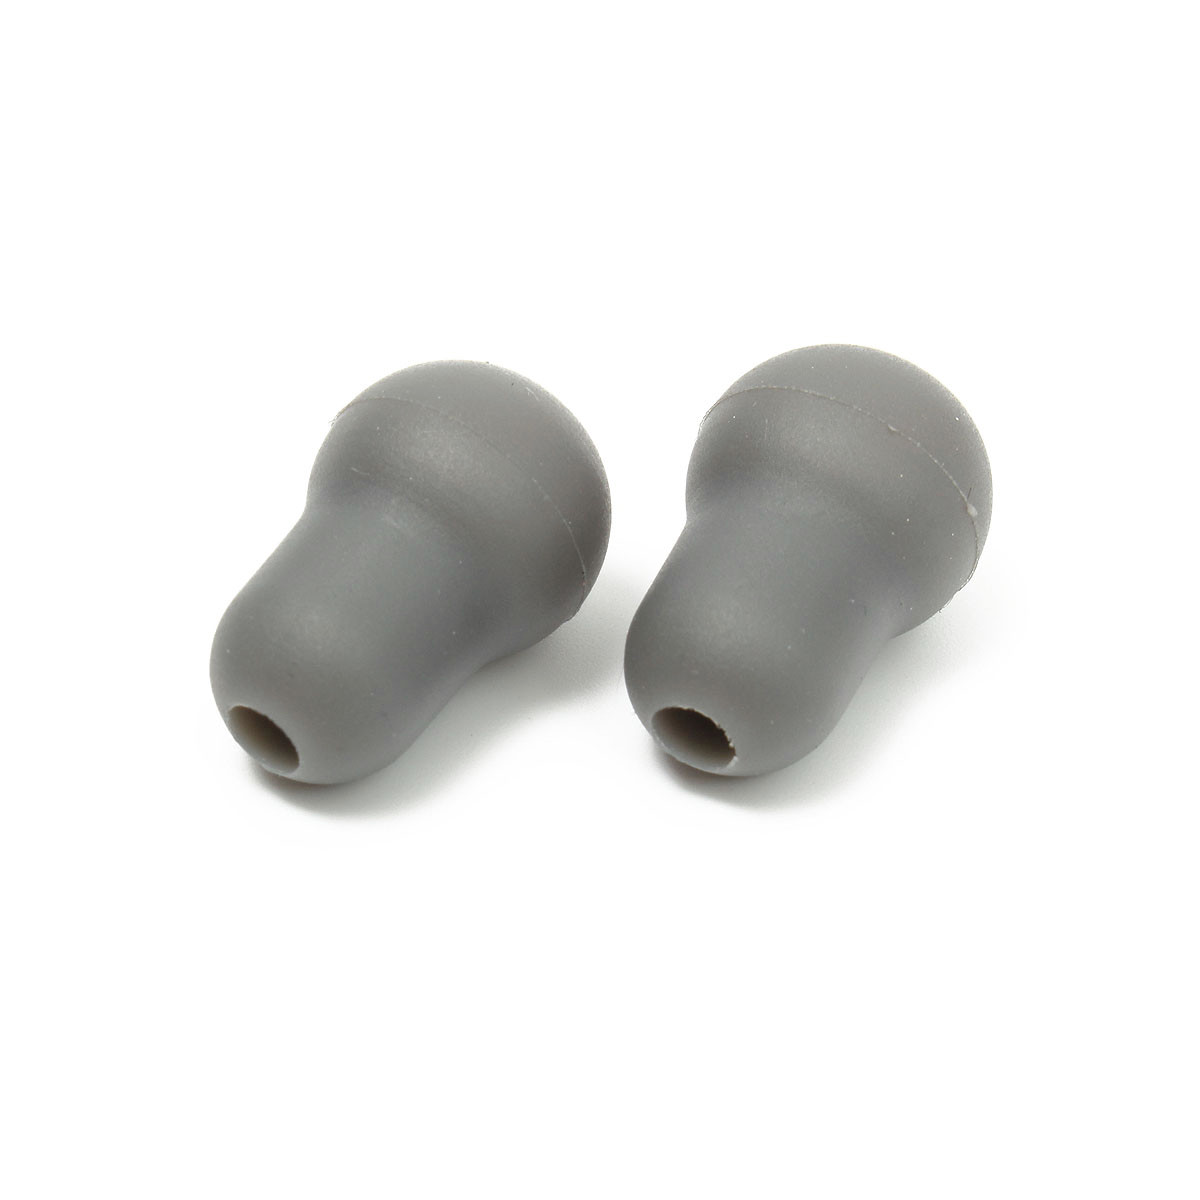 10pcs-Ear-Plugs-Eartips-Earpieces-For-Littmann-Stethoscope-Super-Soft-Silicone-1126408